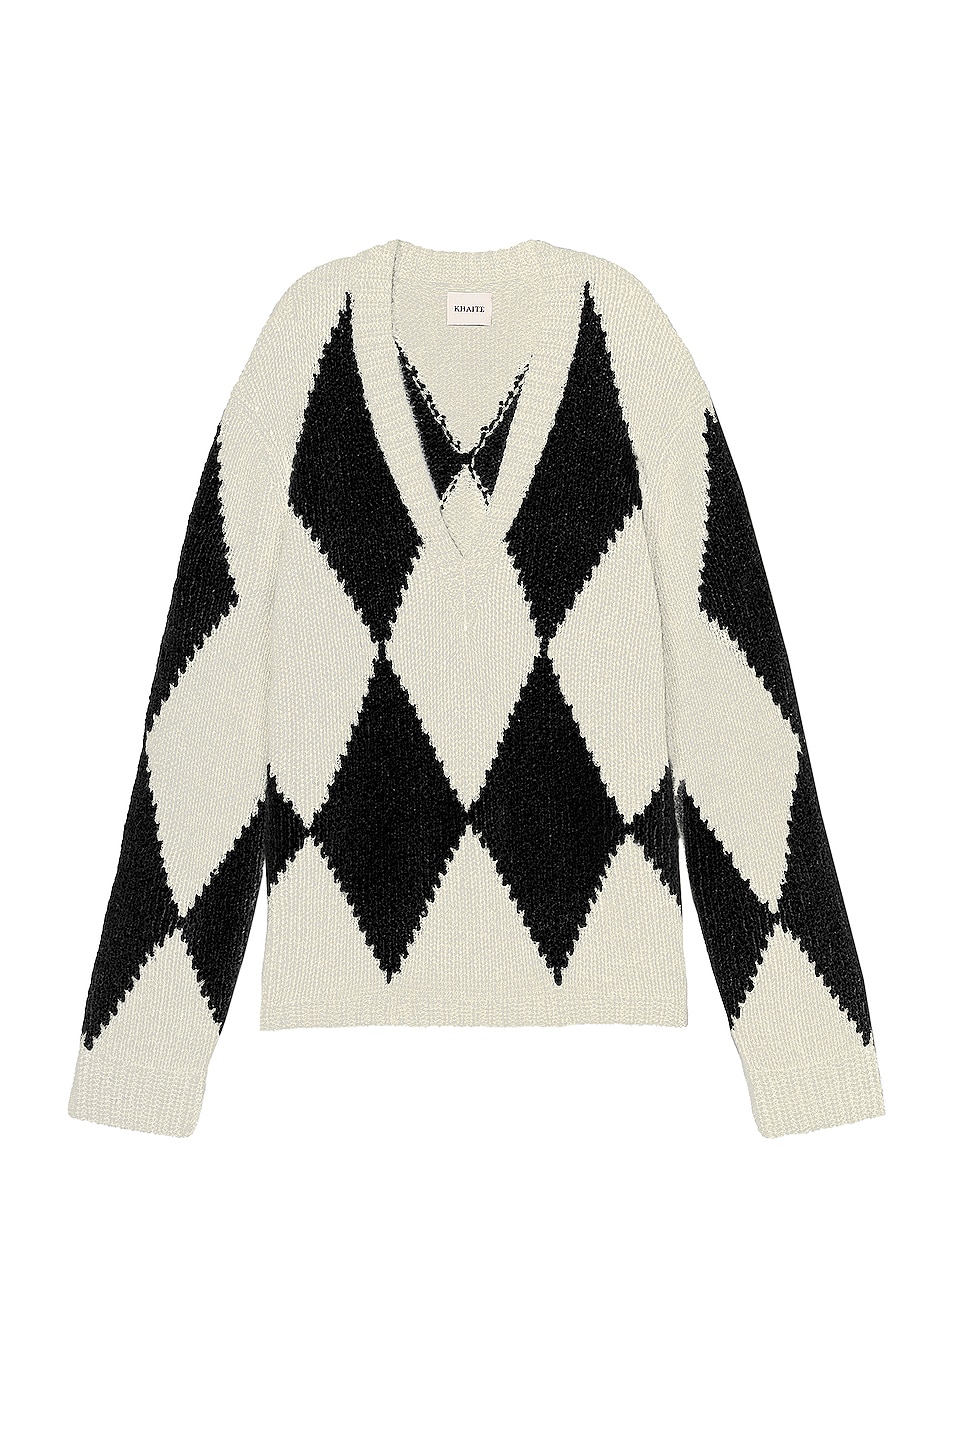 Image 1 of KHAITE Valerie Diamond Cashmere Sweater in Cream & Black